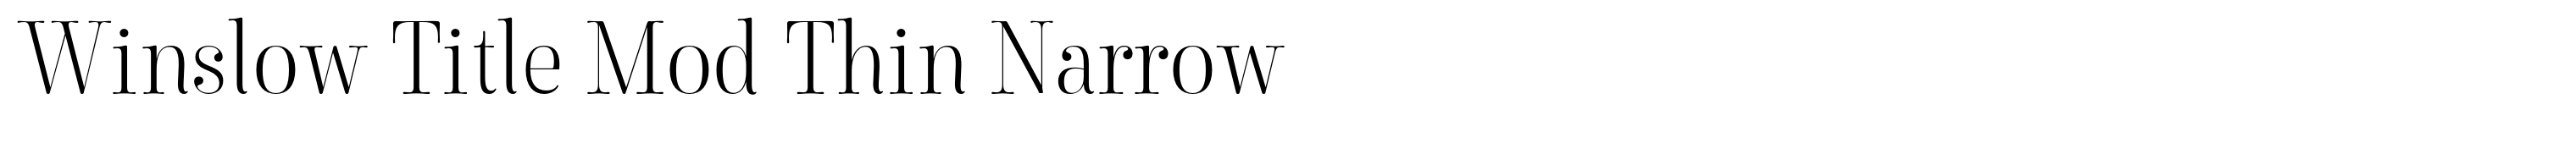 Winslow Title Mod Thin Narrow